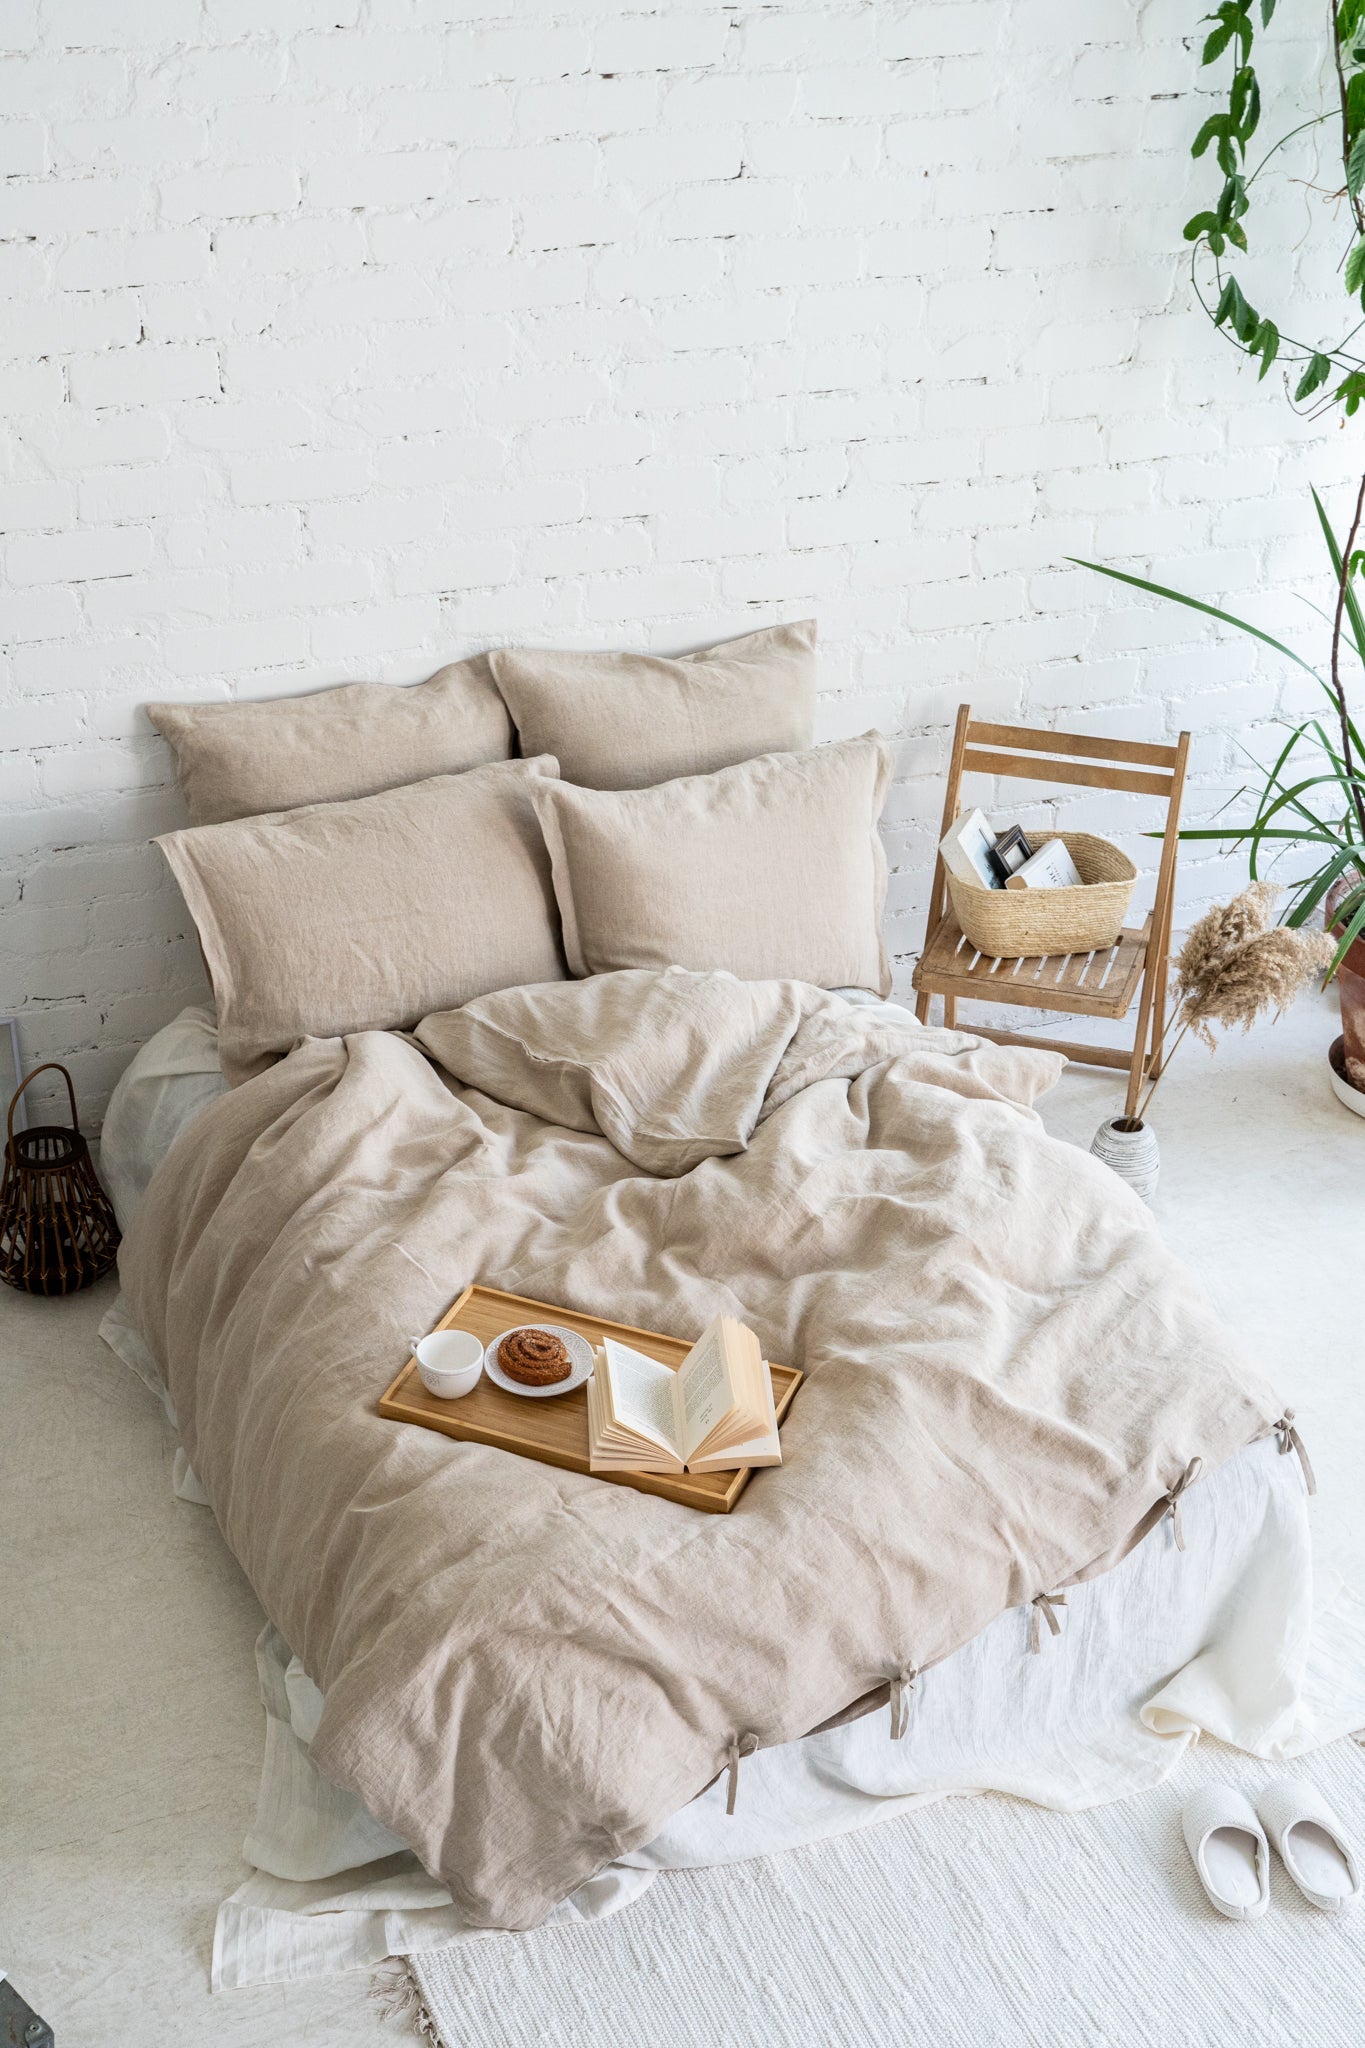 Natural linen bedding set in boho interior